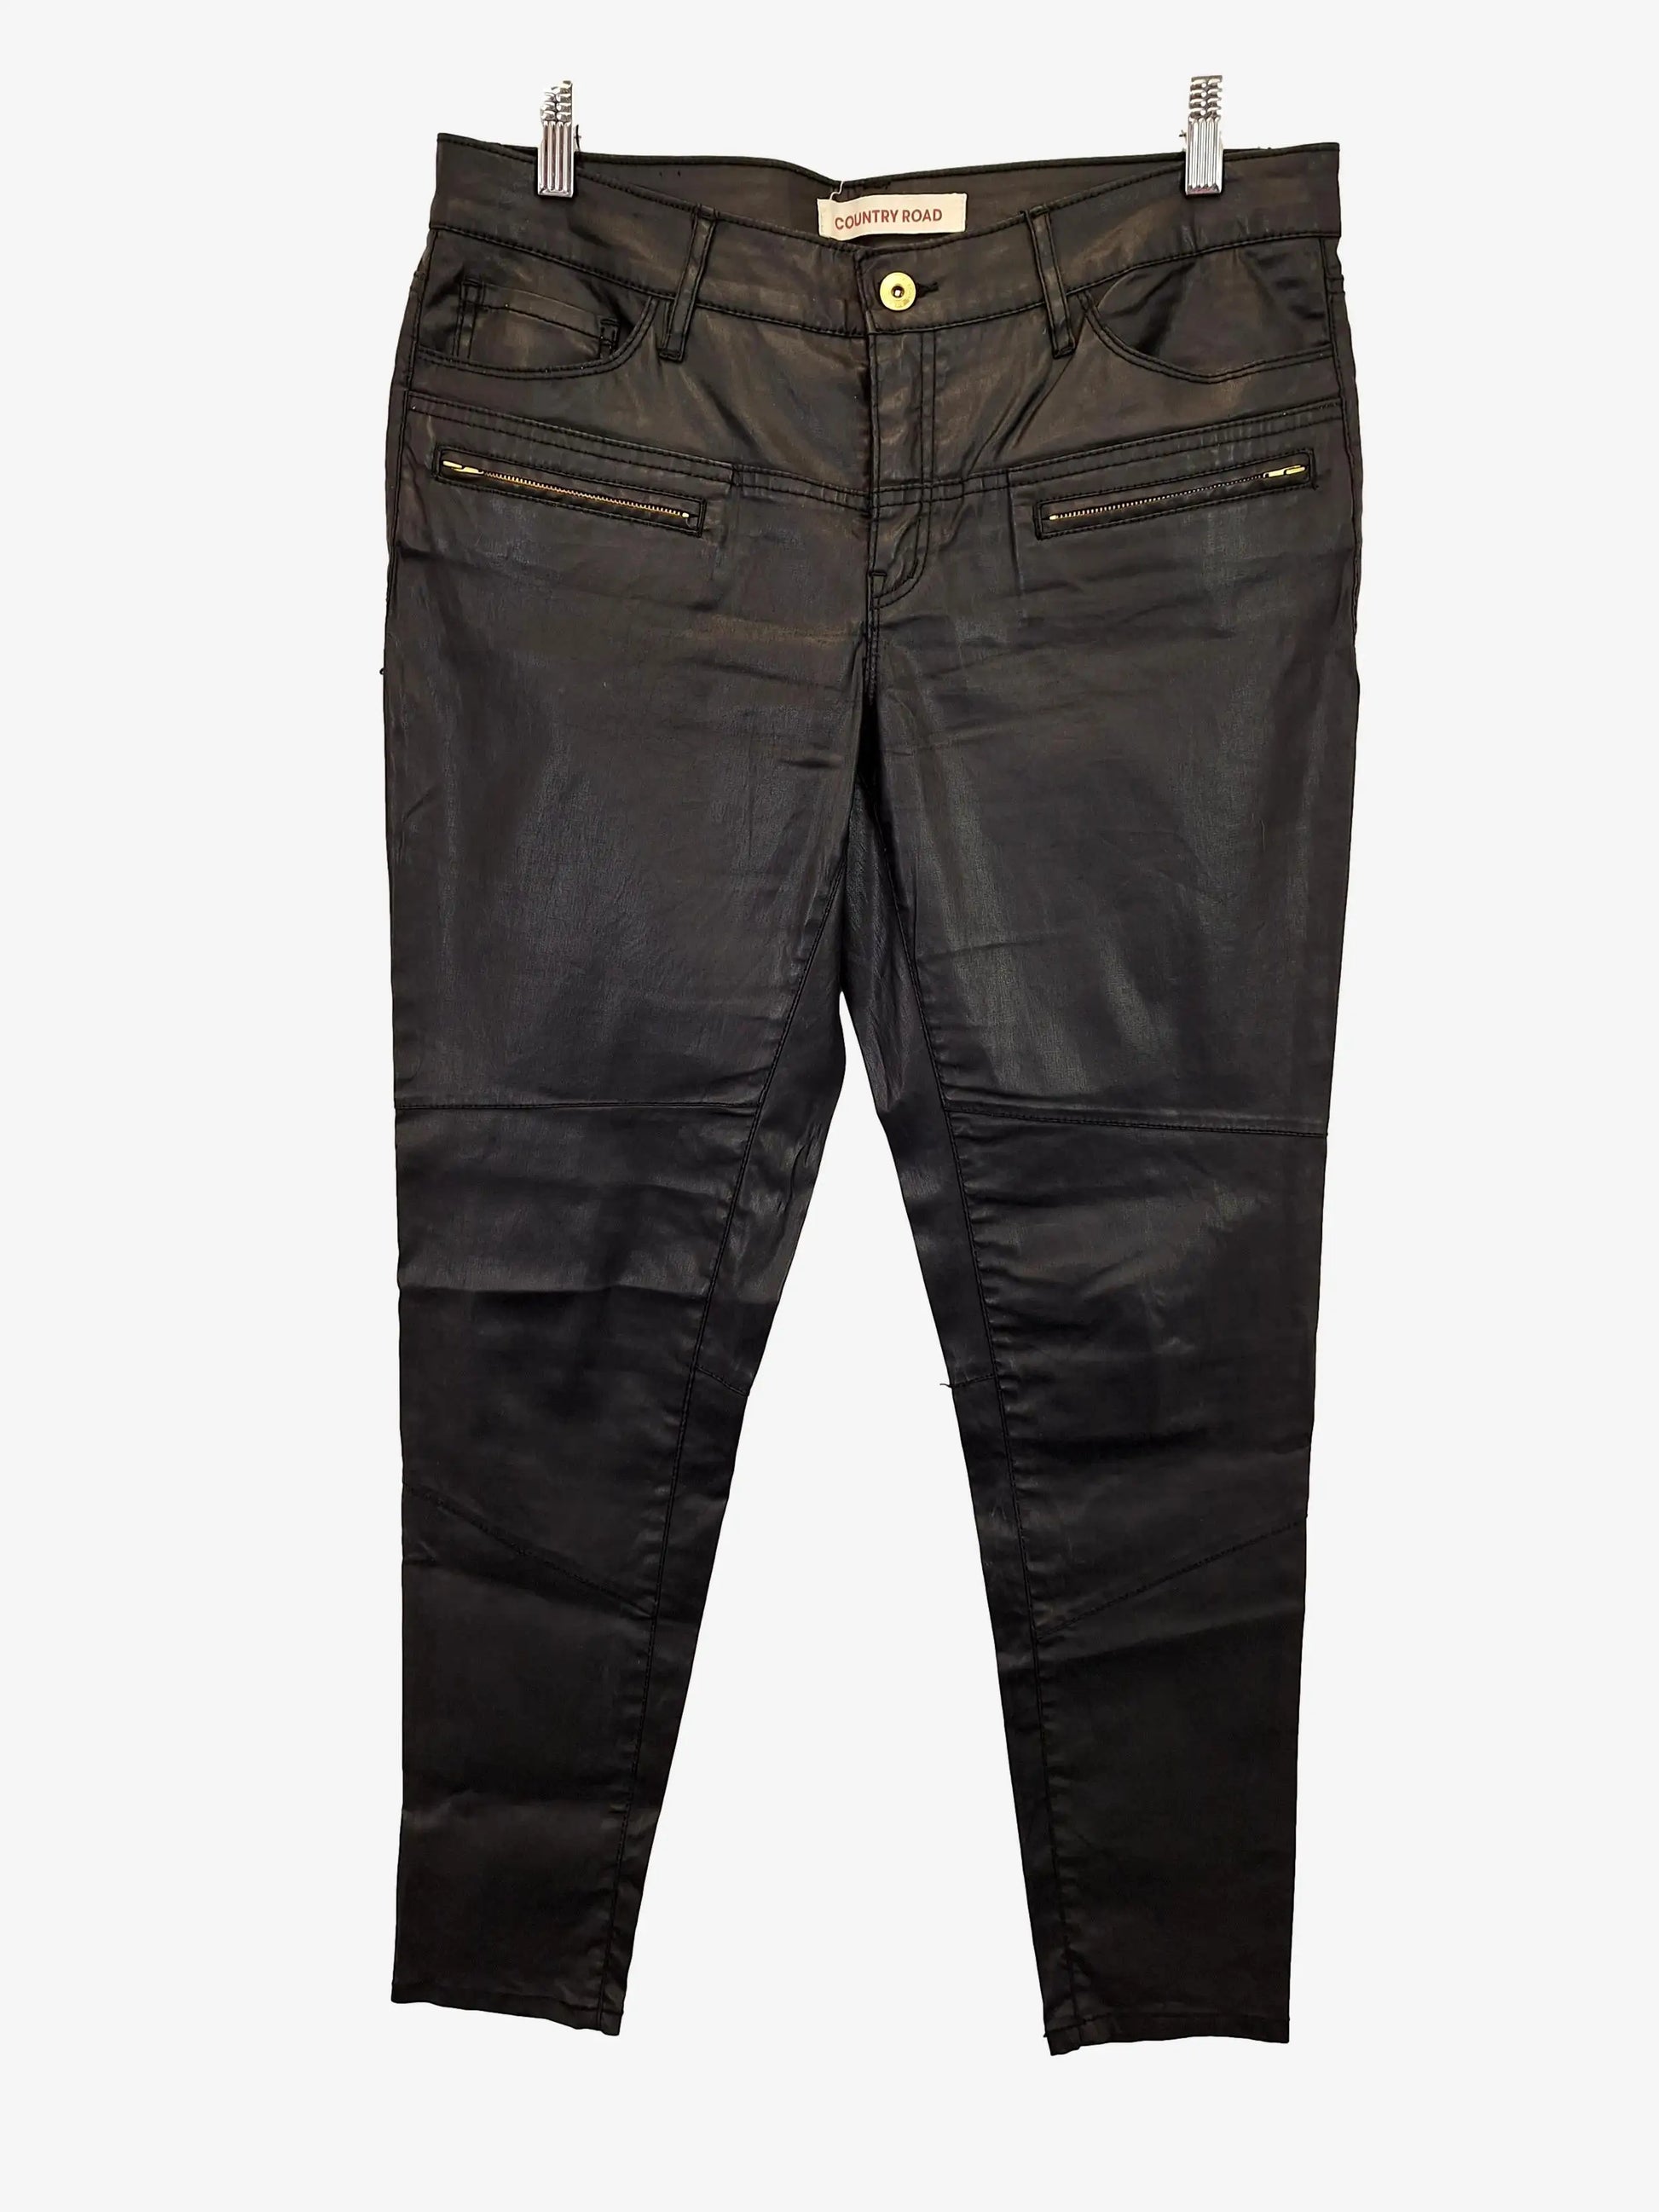 Zara Biker Faux Leather Pants Size S – SwapUp